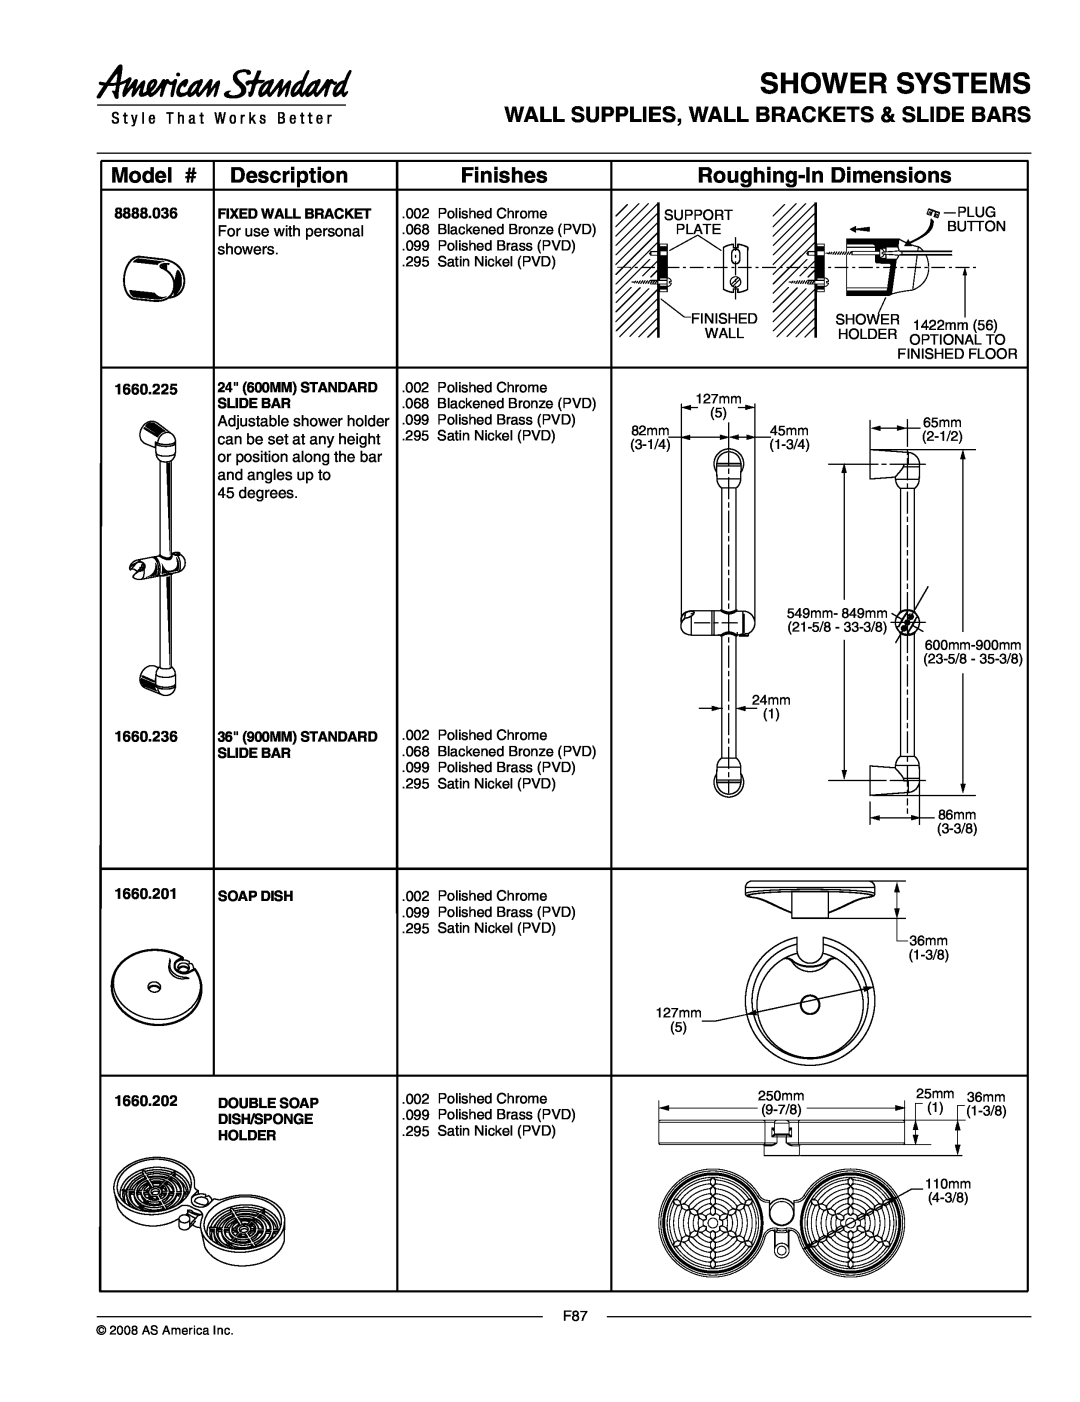 American Standard 1660.201 dimensions Shower Systems, Wall Supplies, Wall Brackets & Slide Bars, Model # Description 